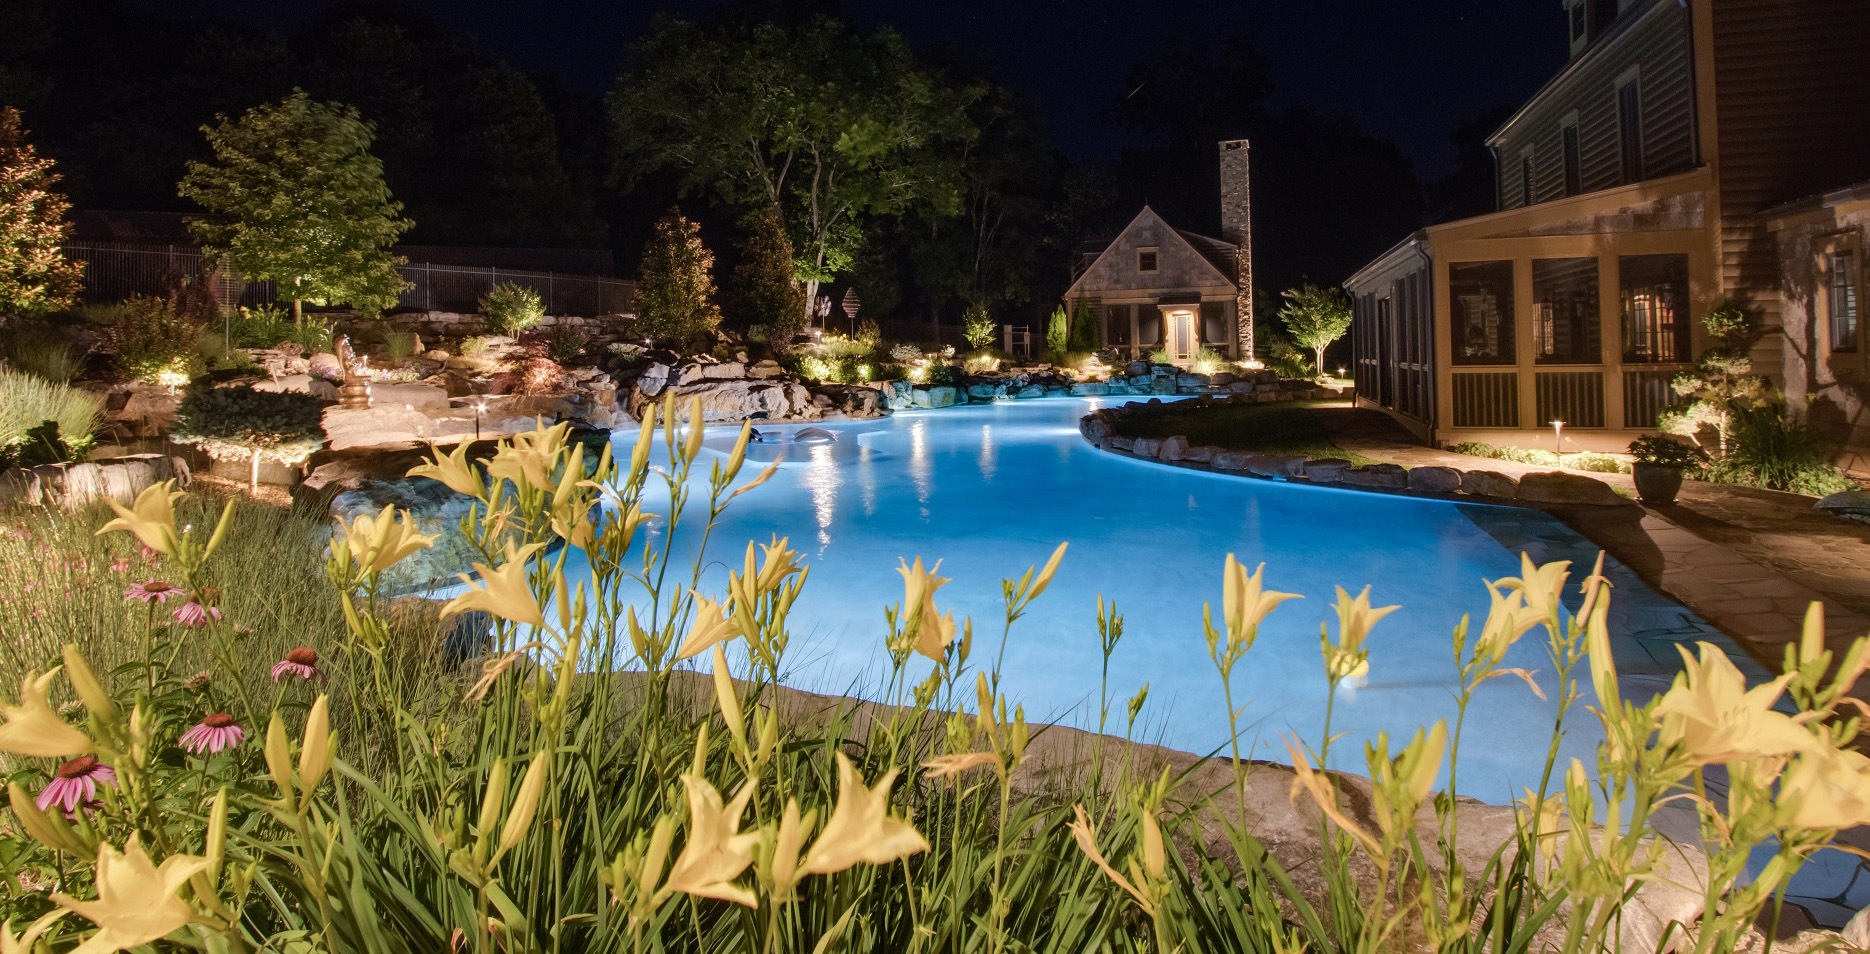 Pool and surrounding yard lighting